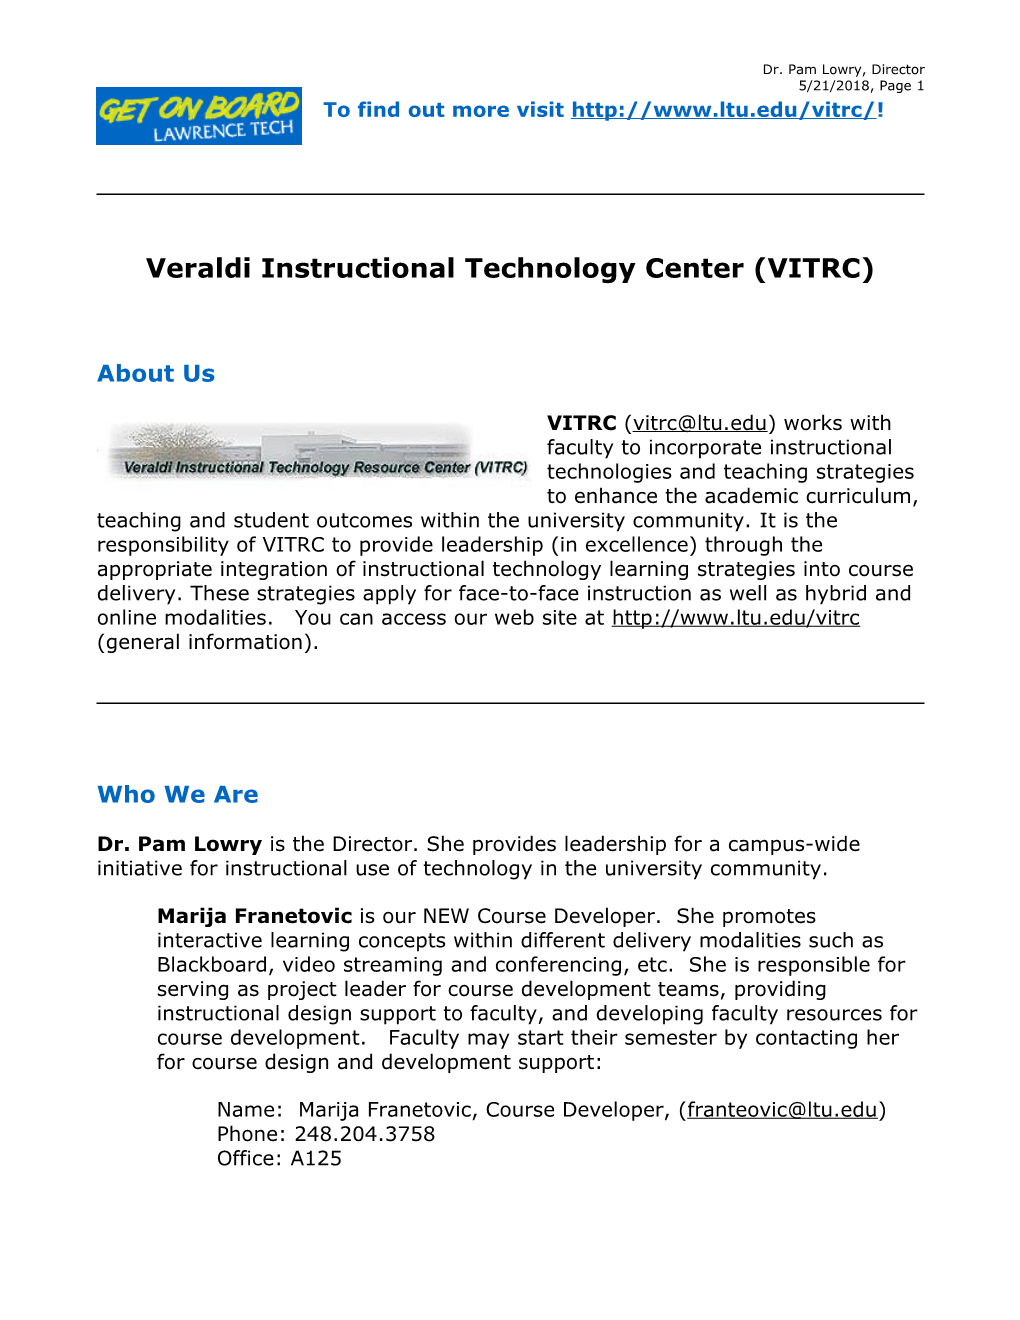 Veraldi Instructional Technology Resource Center (VITRC)